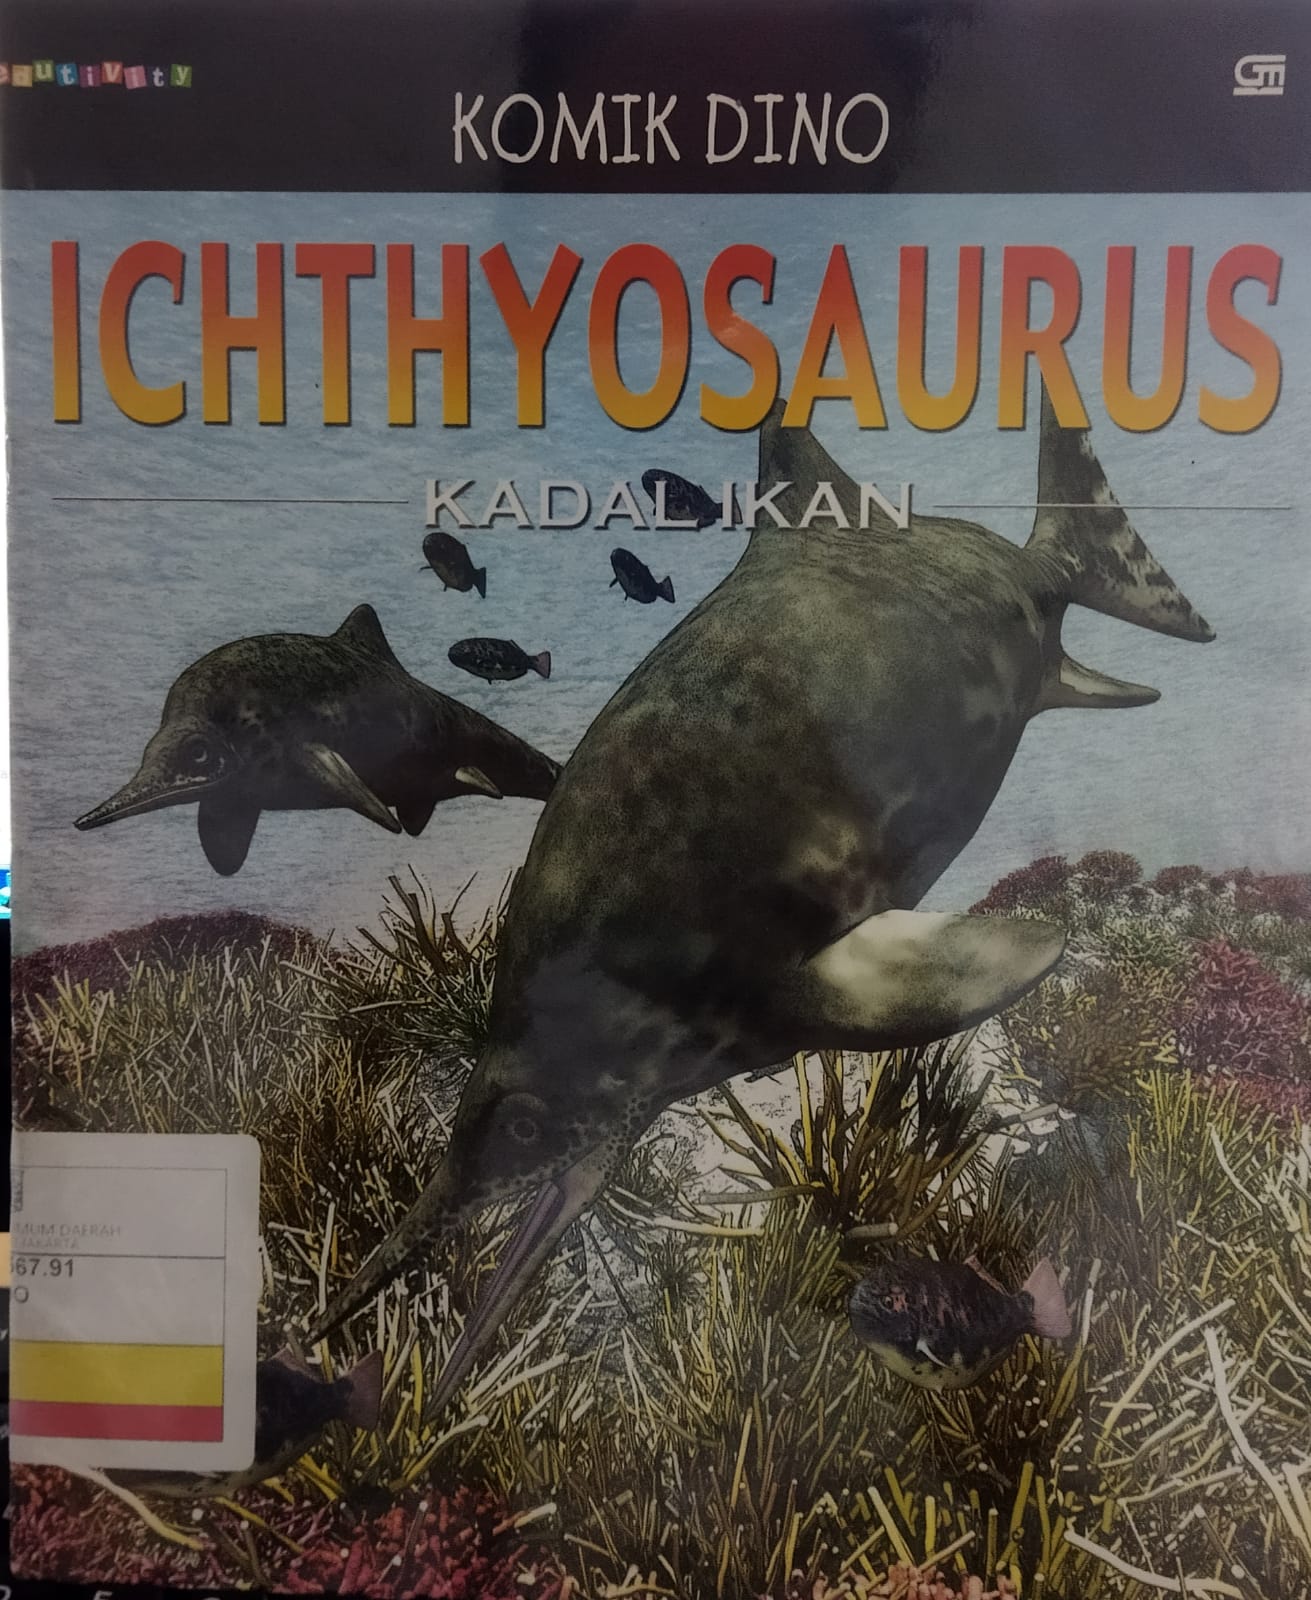 Komik dino Ichthyosaurus : kadal ikan